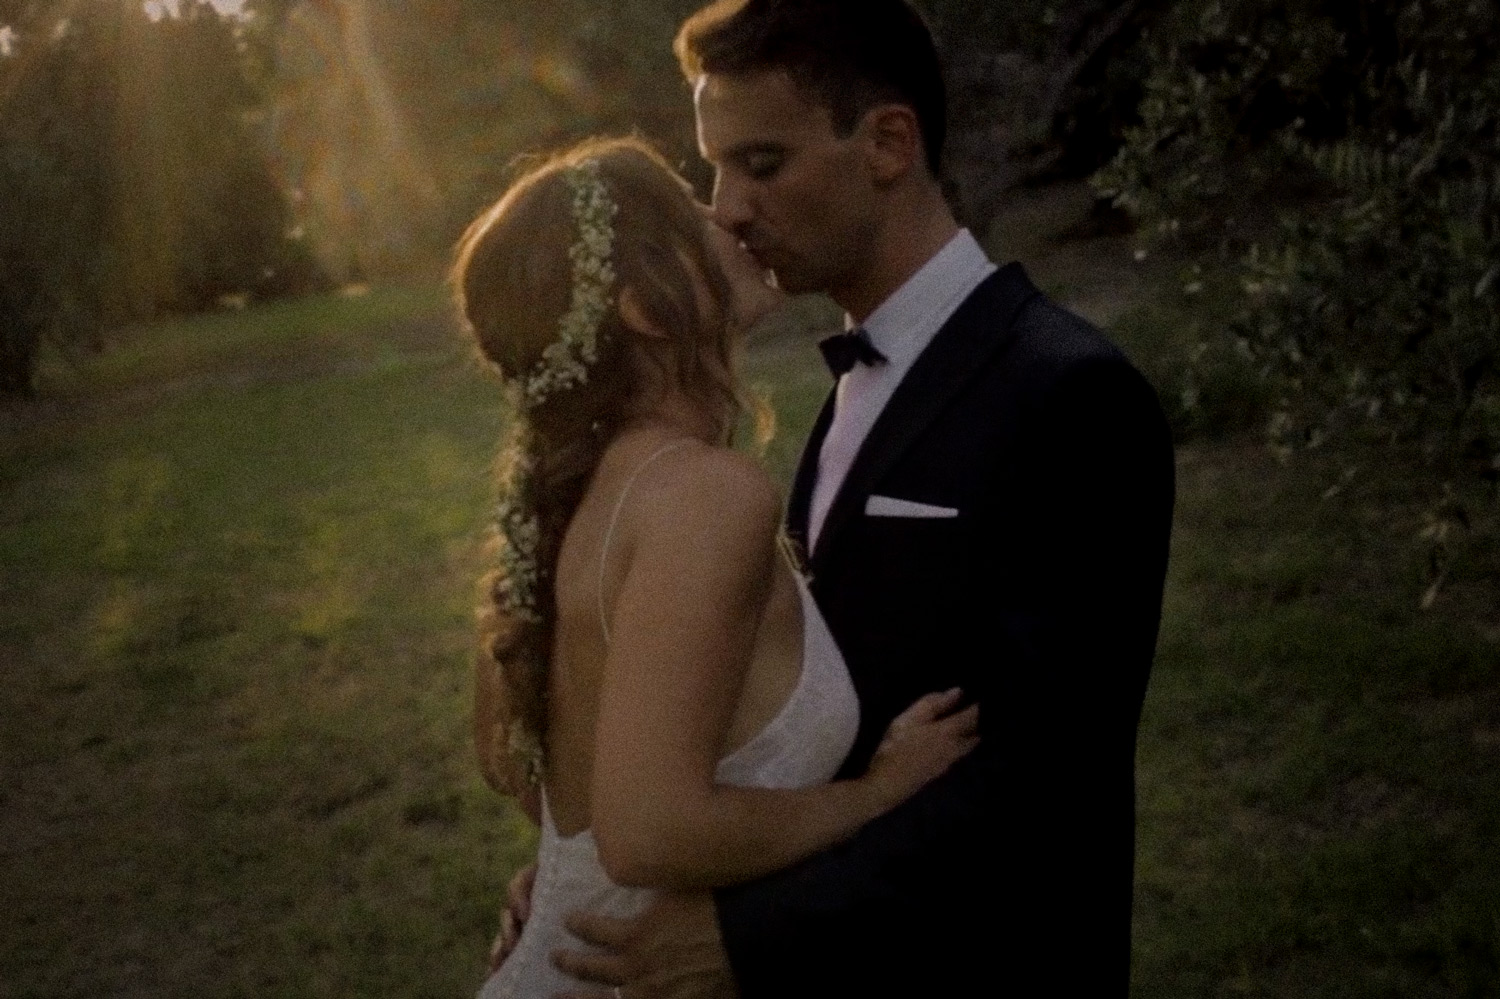 emotional wedding film fano sposi si baciano